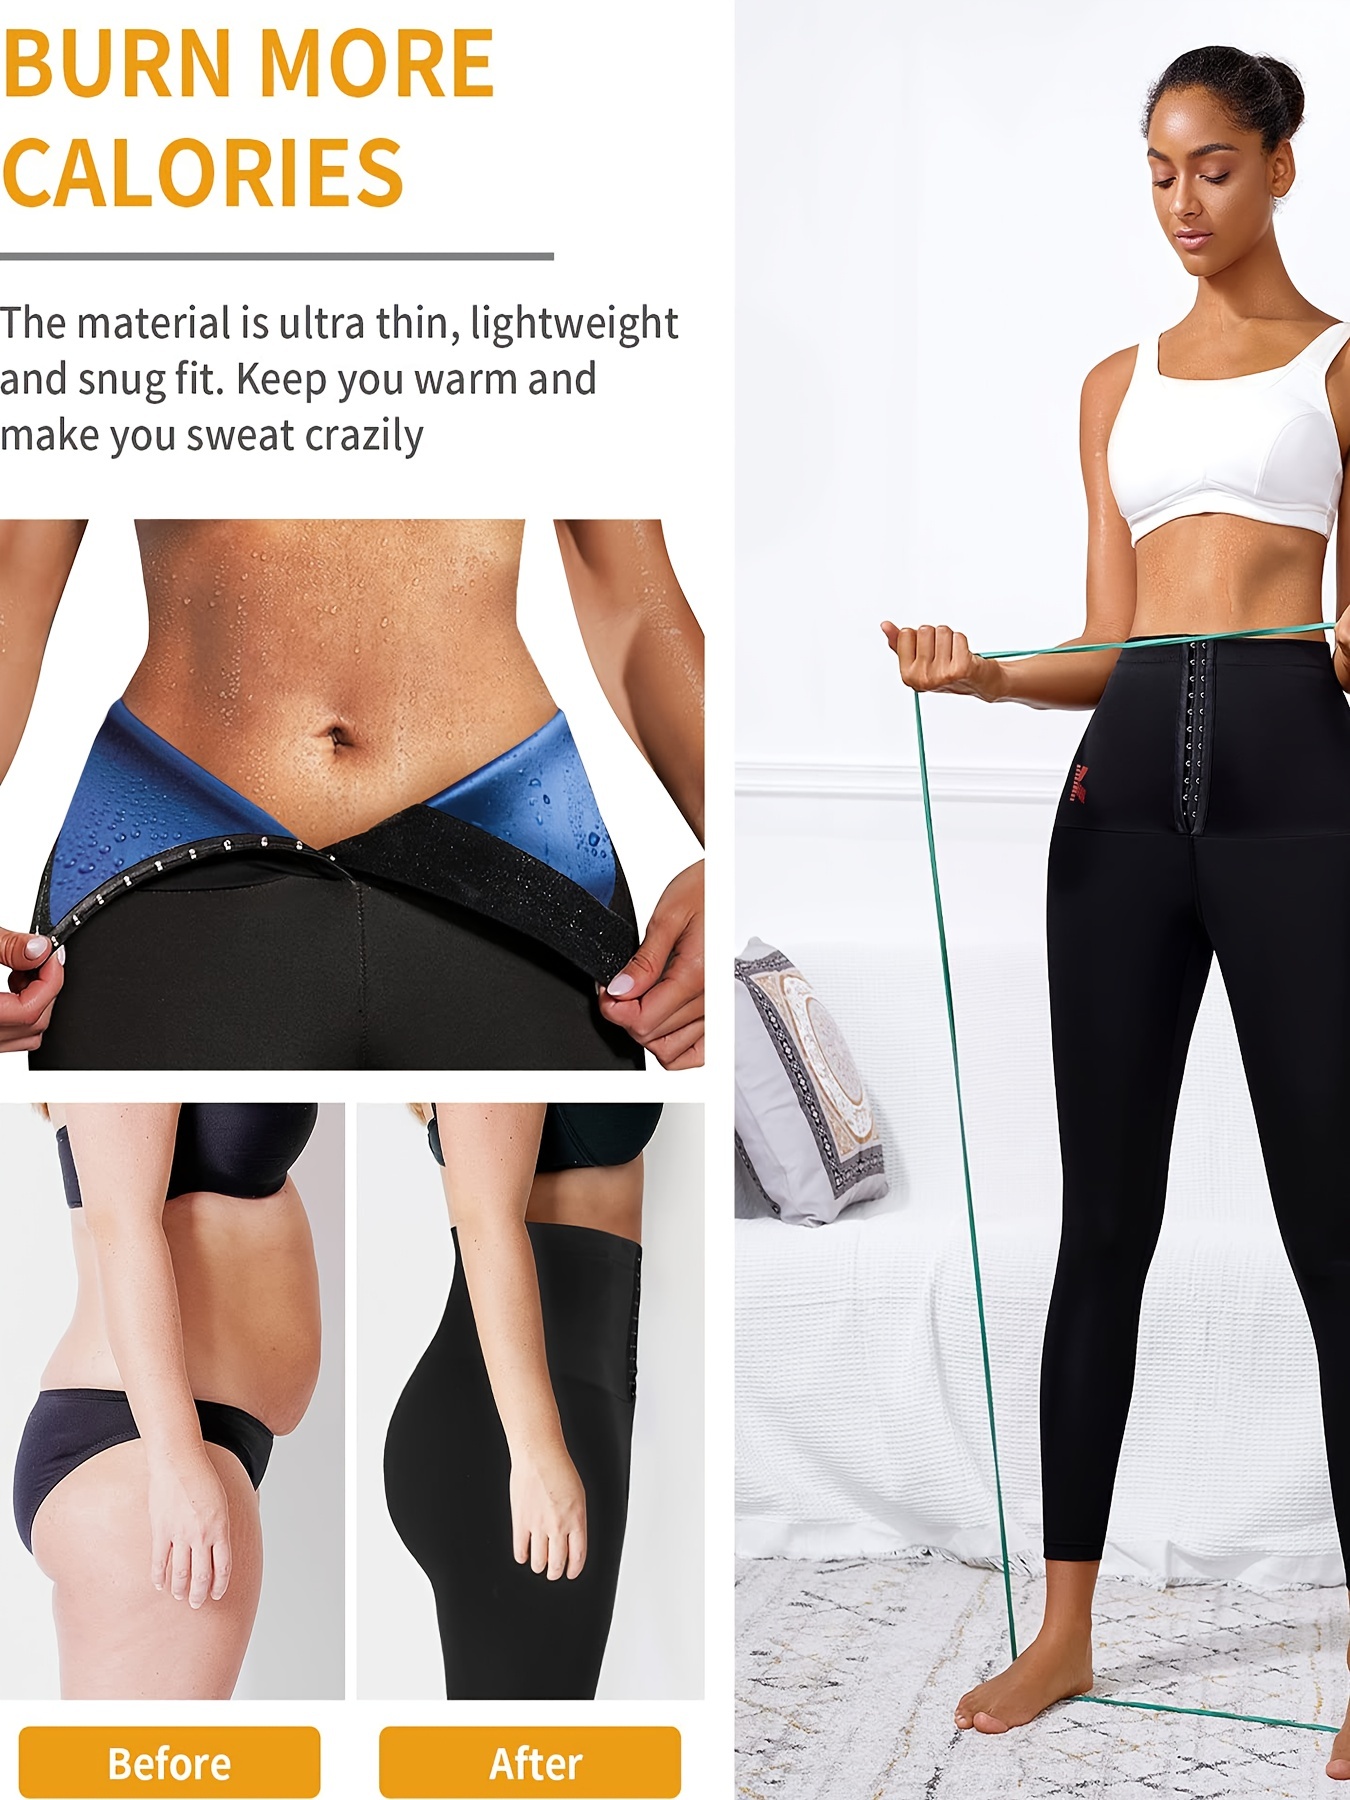 Sauna Shaper Pants Legging for Women Weight Loss High Waist Yoga Sweat Pants  US